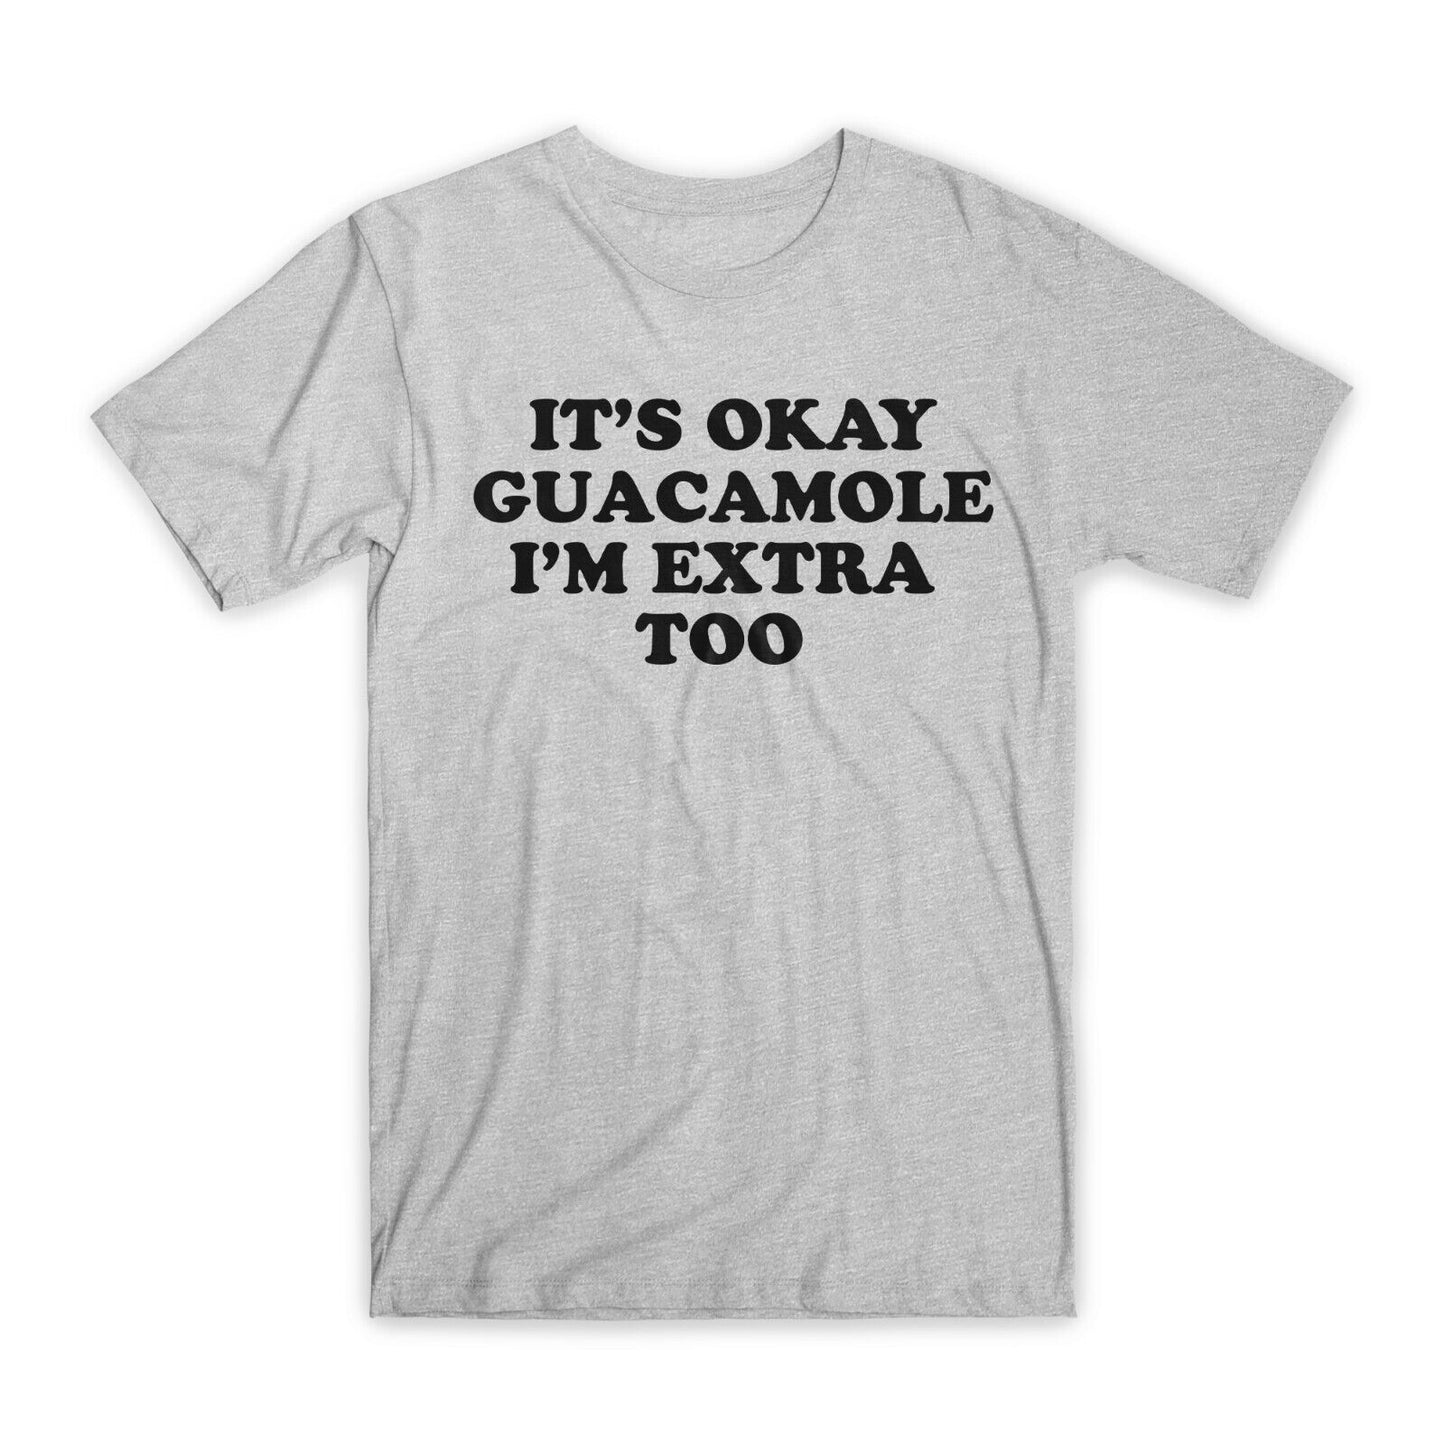 It's Okay Guacamole I'm Extra Too T-Shirt Premium Soft Cotton Funny Tee Gift NEW